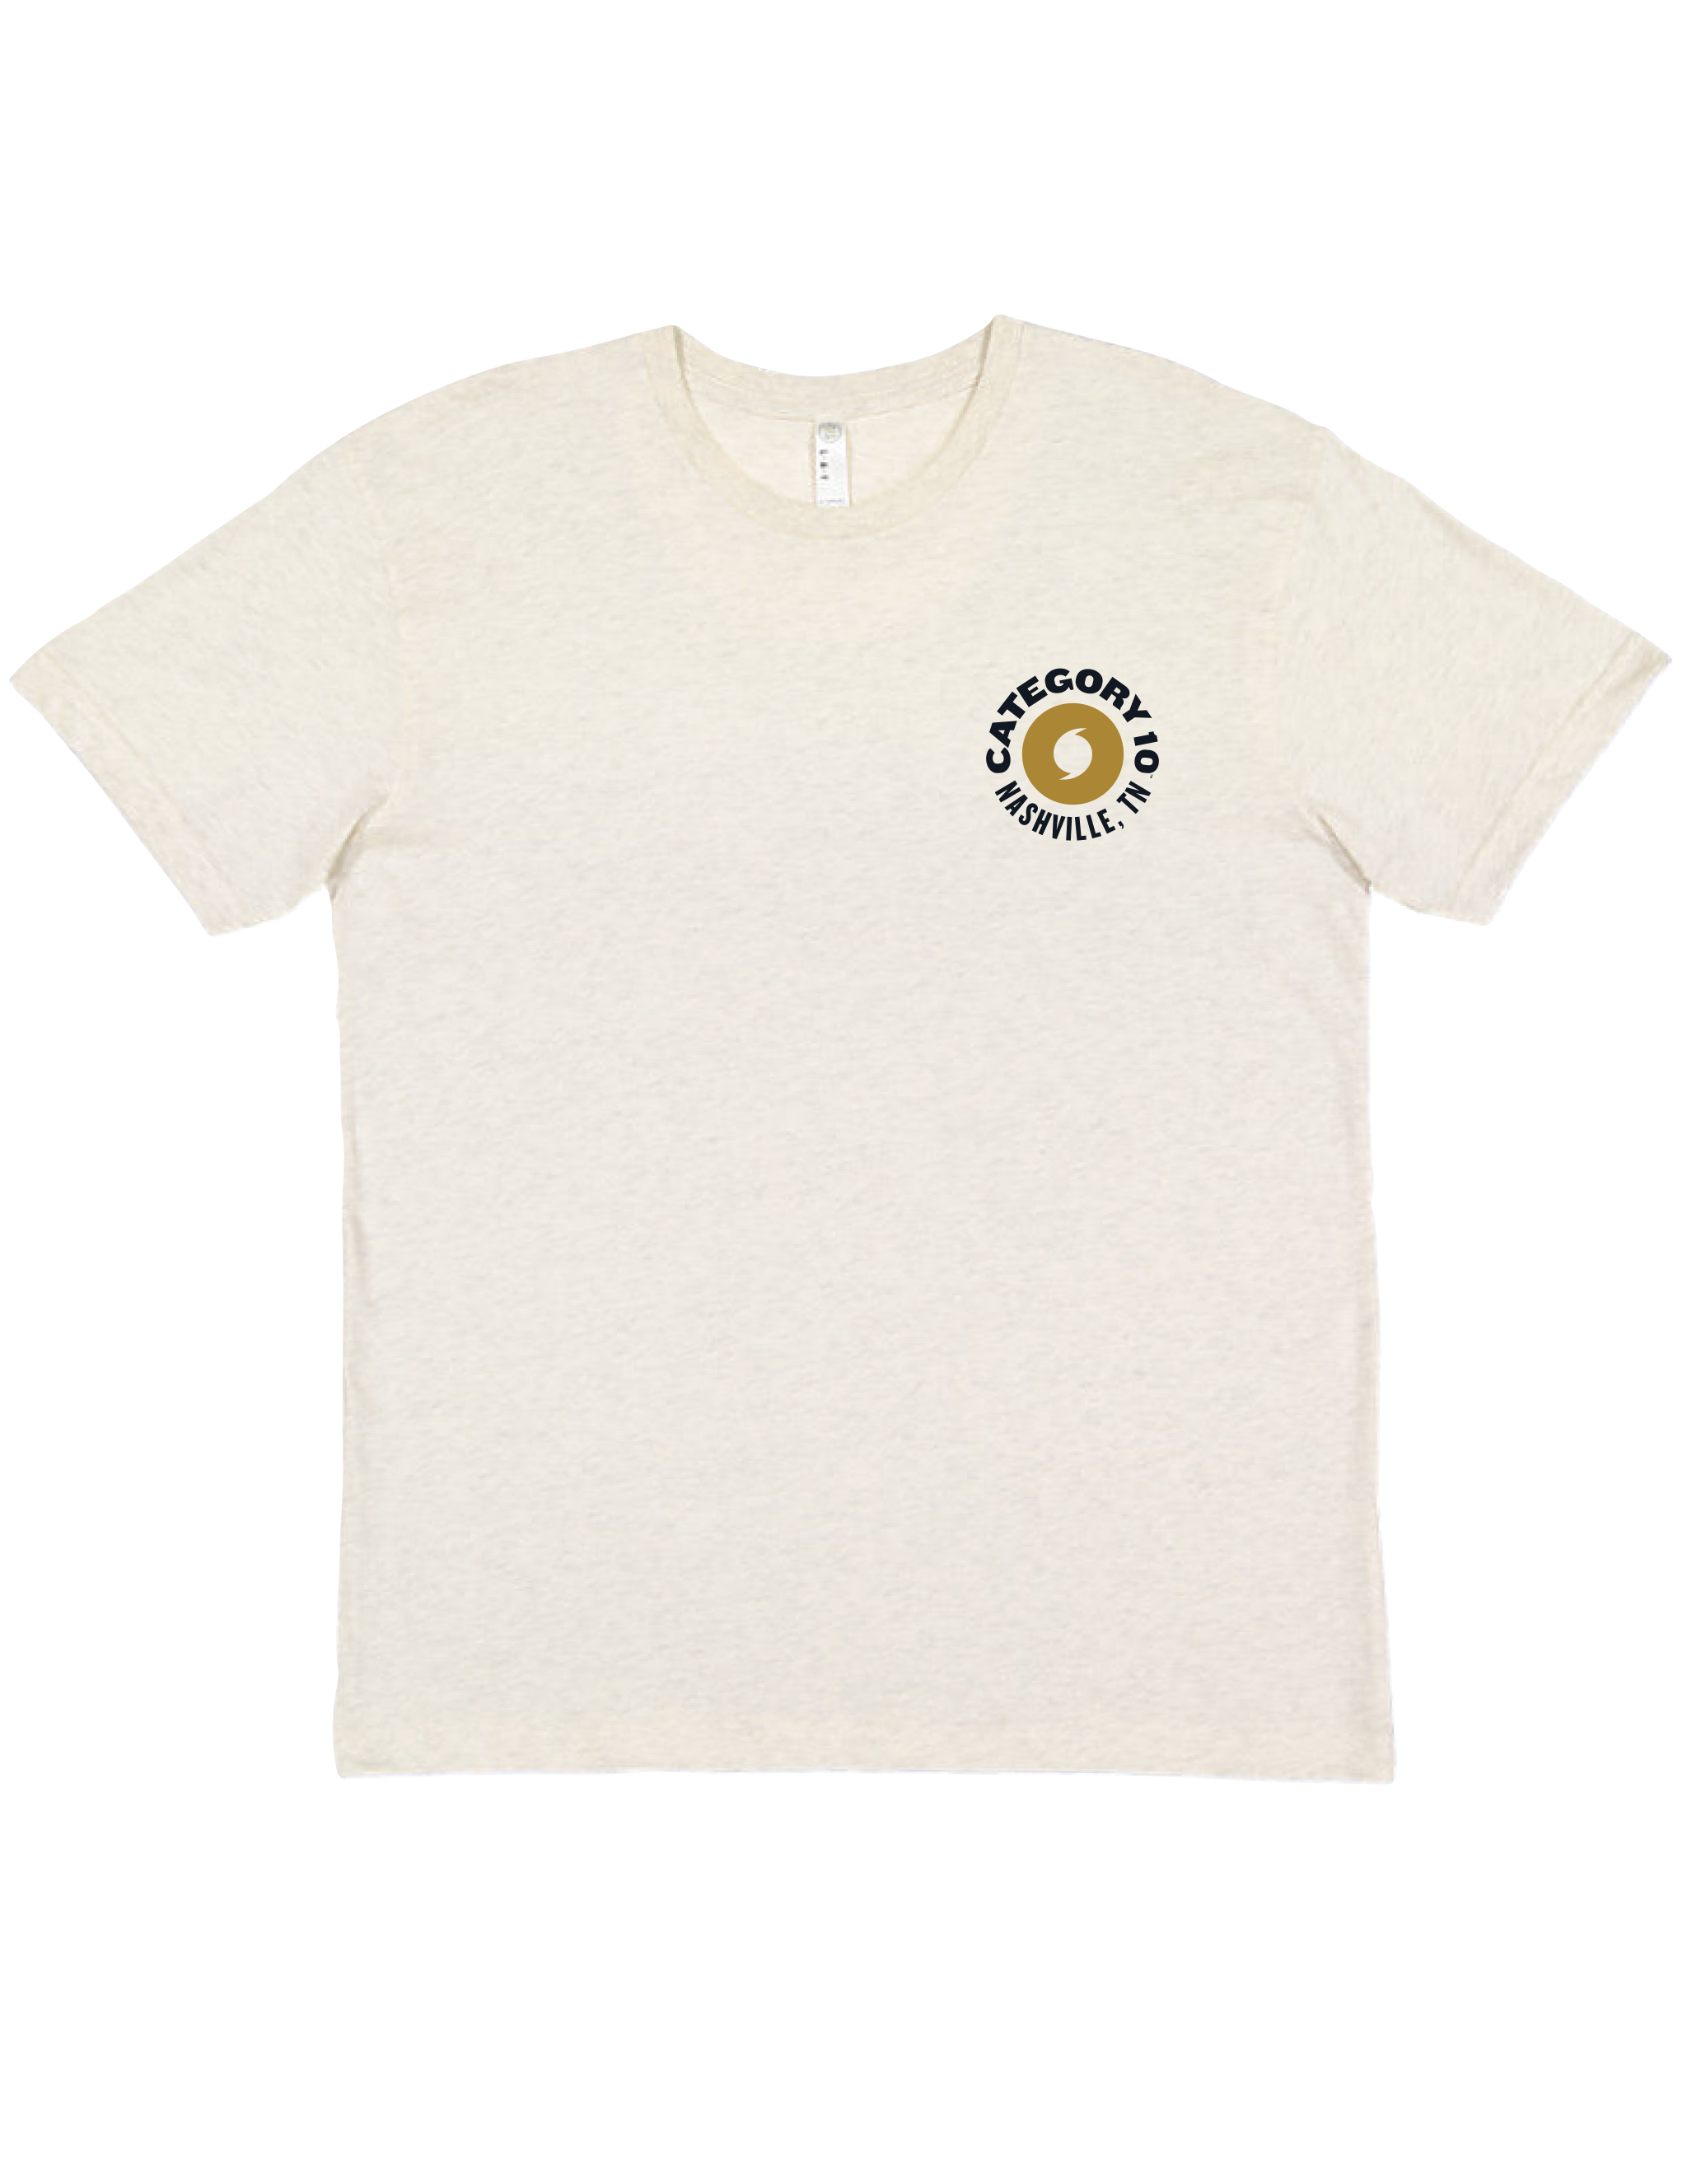 Category 10 Nashville Storm Chasin T-Shirt